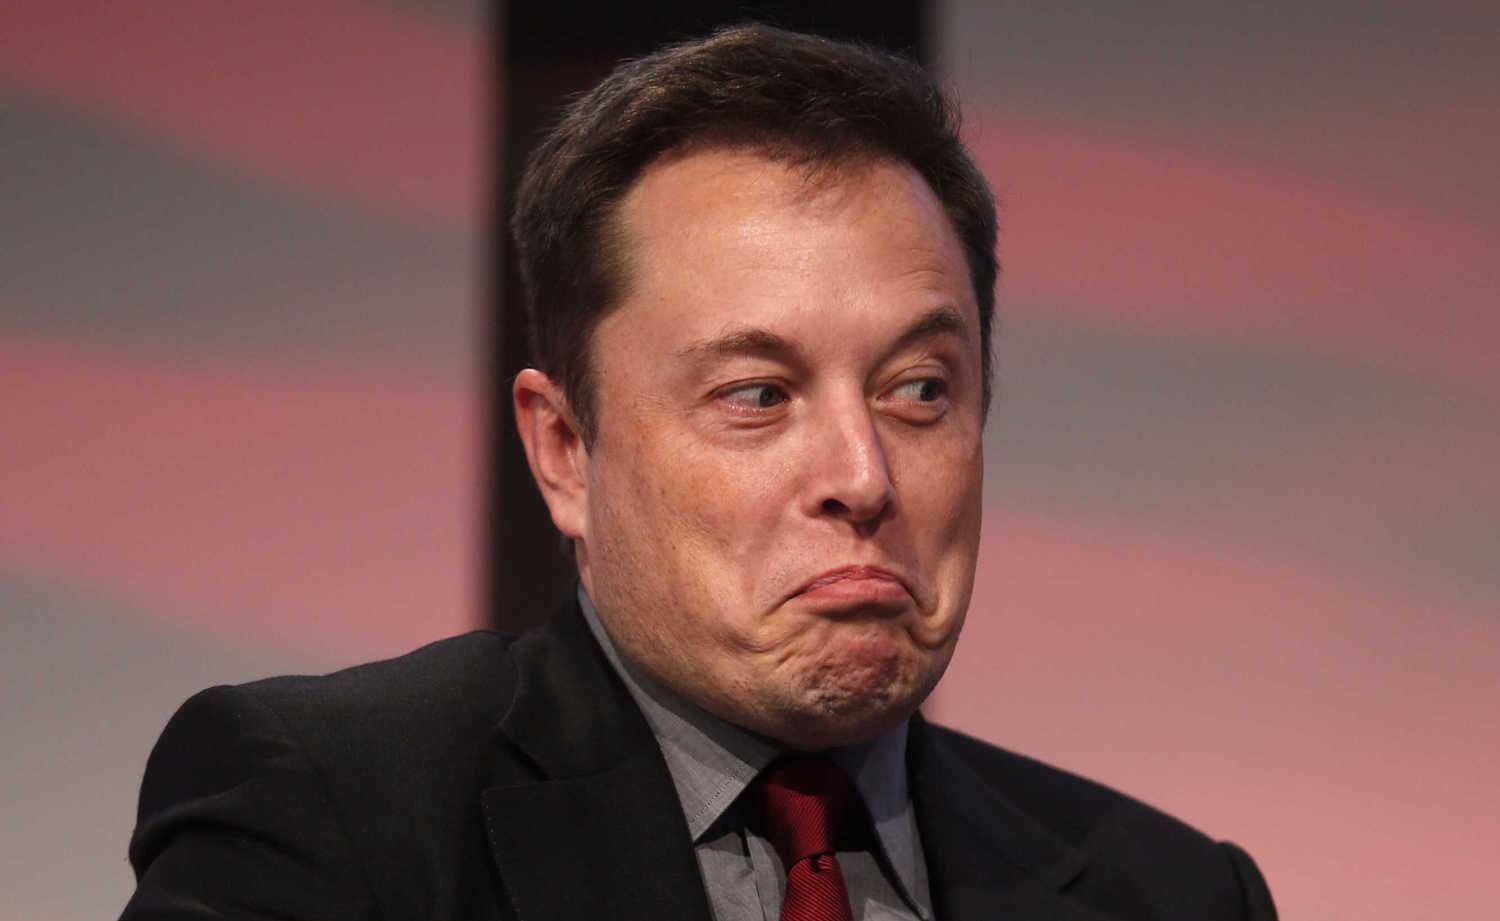 The big short: Is Elon Musk going to renegotiate Twitter deal?